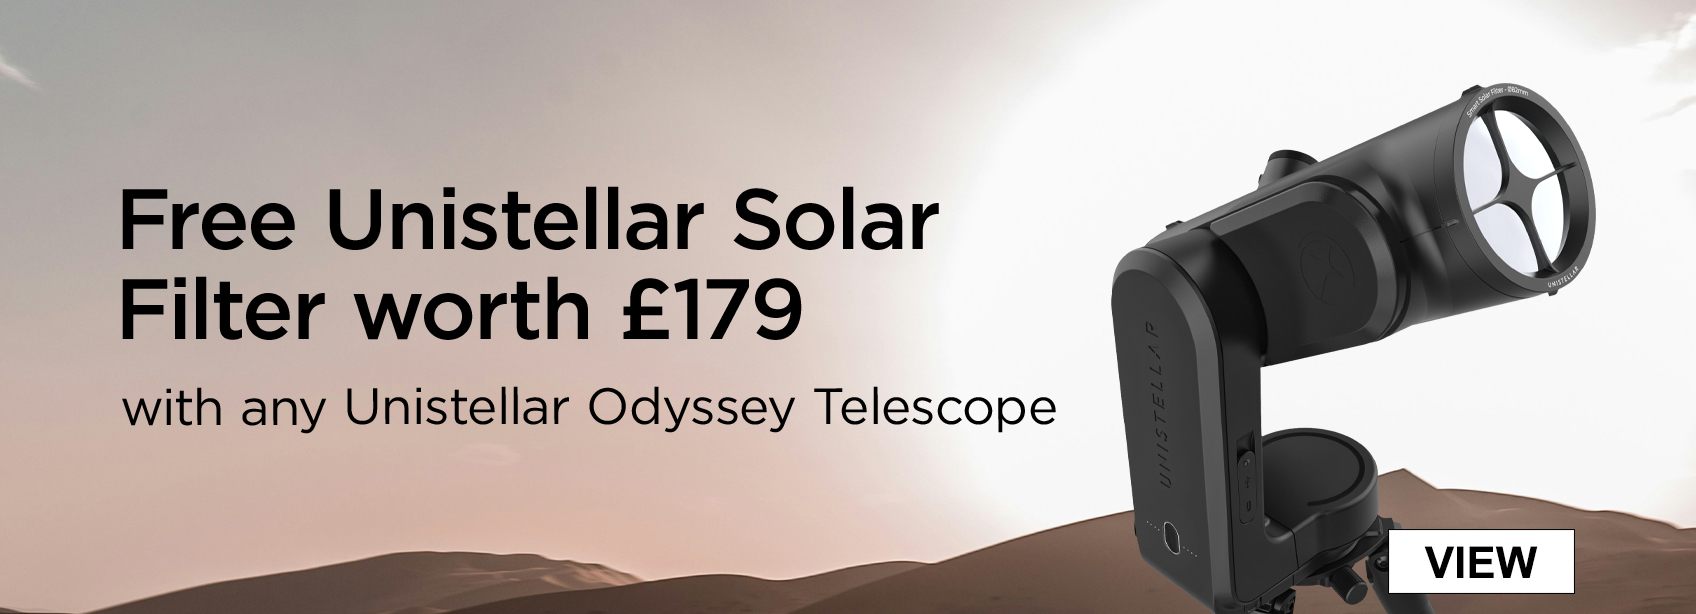 Free Unistellar Solar Filter worth £179 with any Unistellar Odyssey Telescope